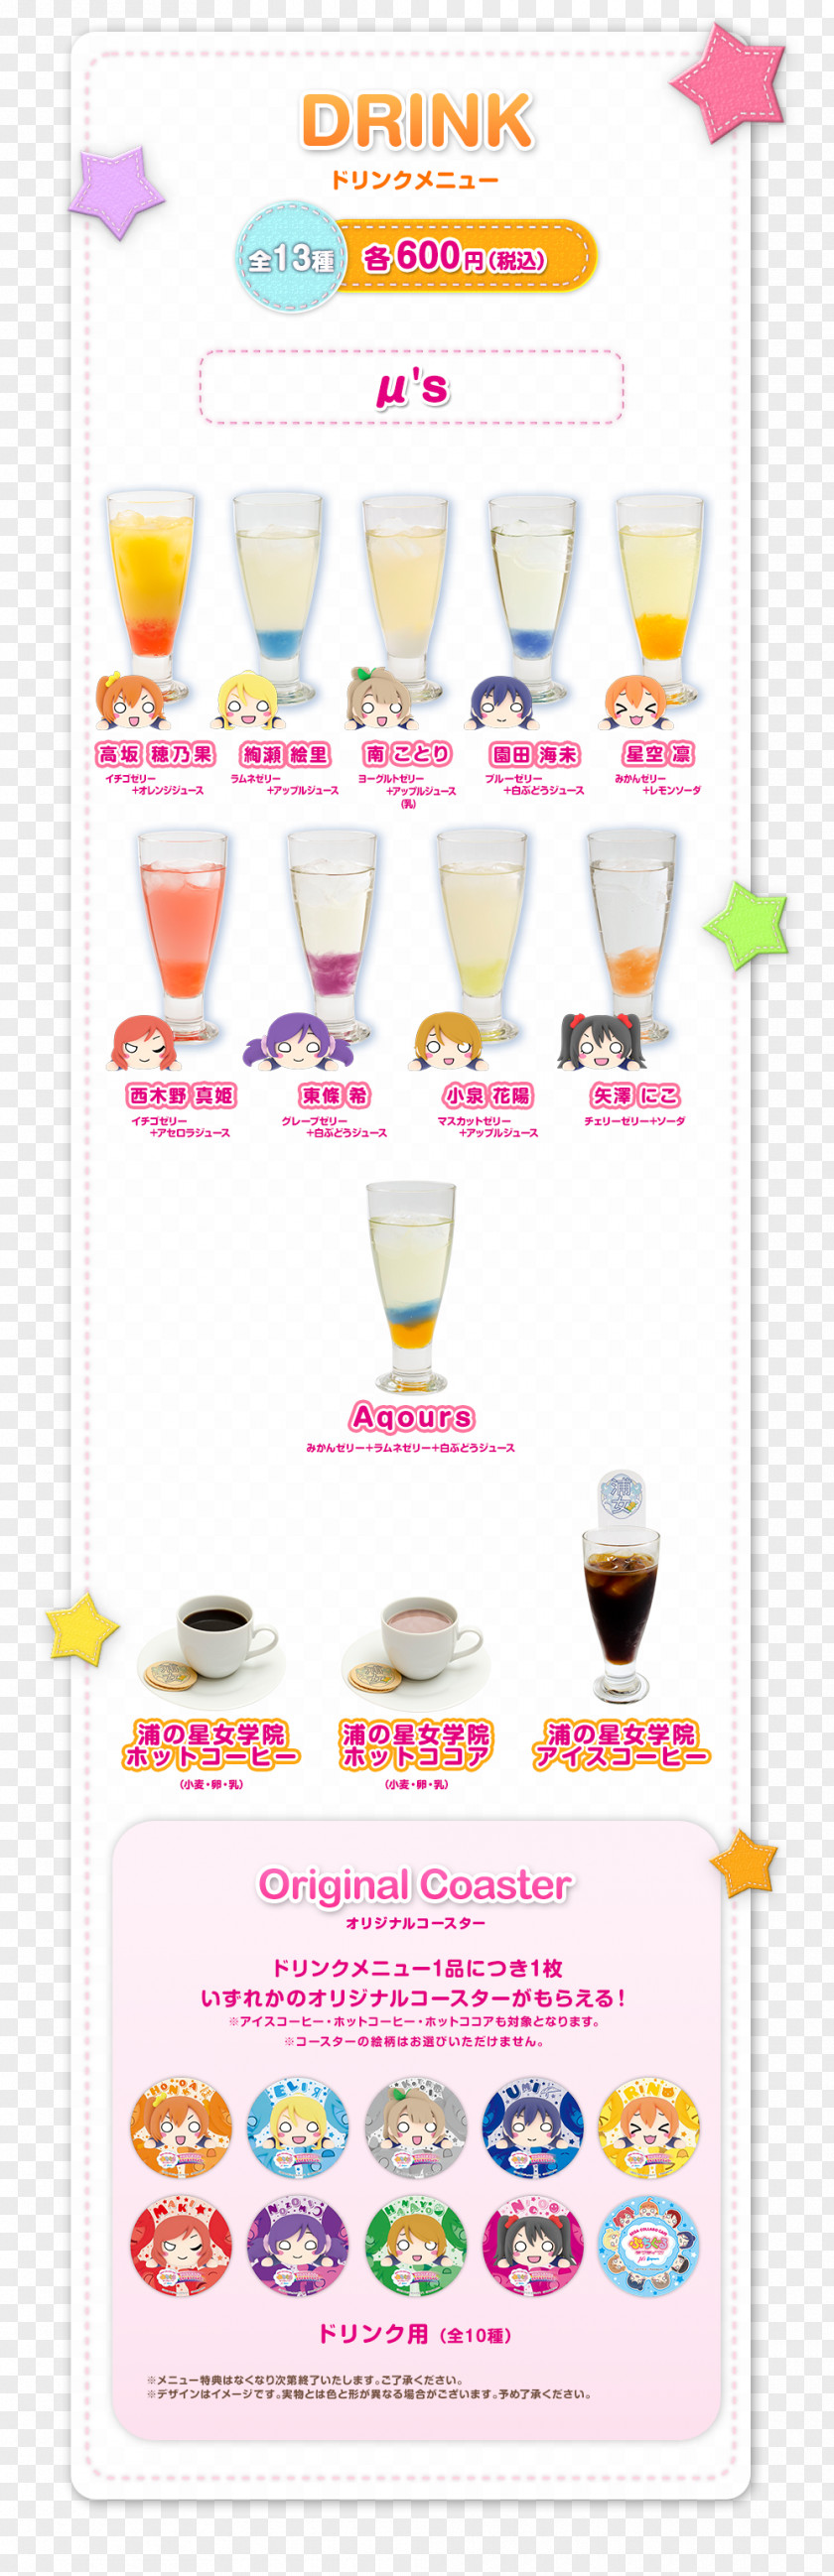 Menu DRINK Cafe THE SUN ぷちぐるラブライブ! SEGA Collabocafe PNG